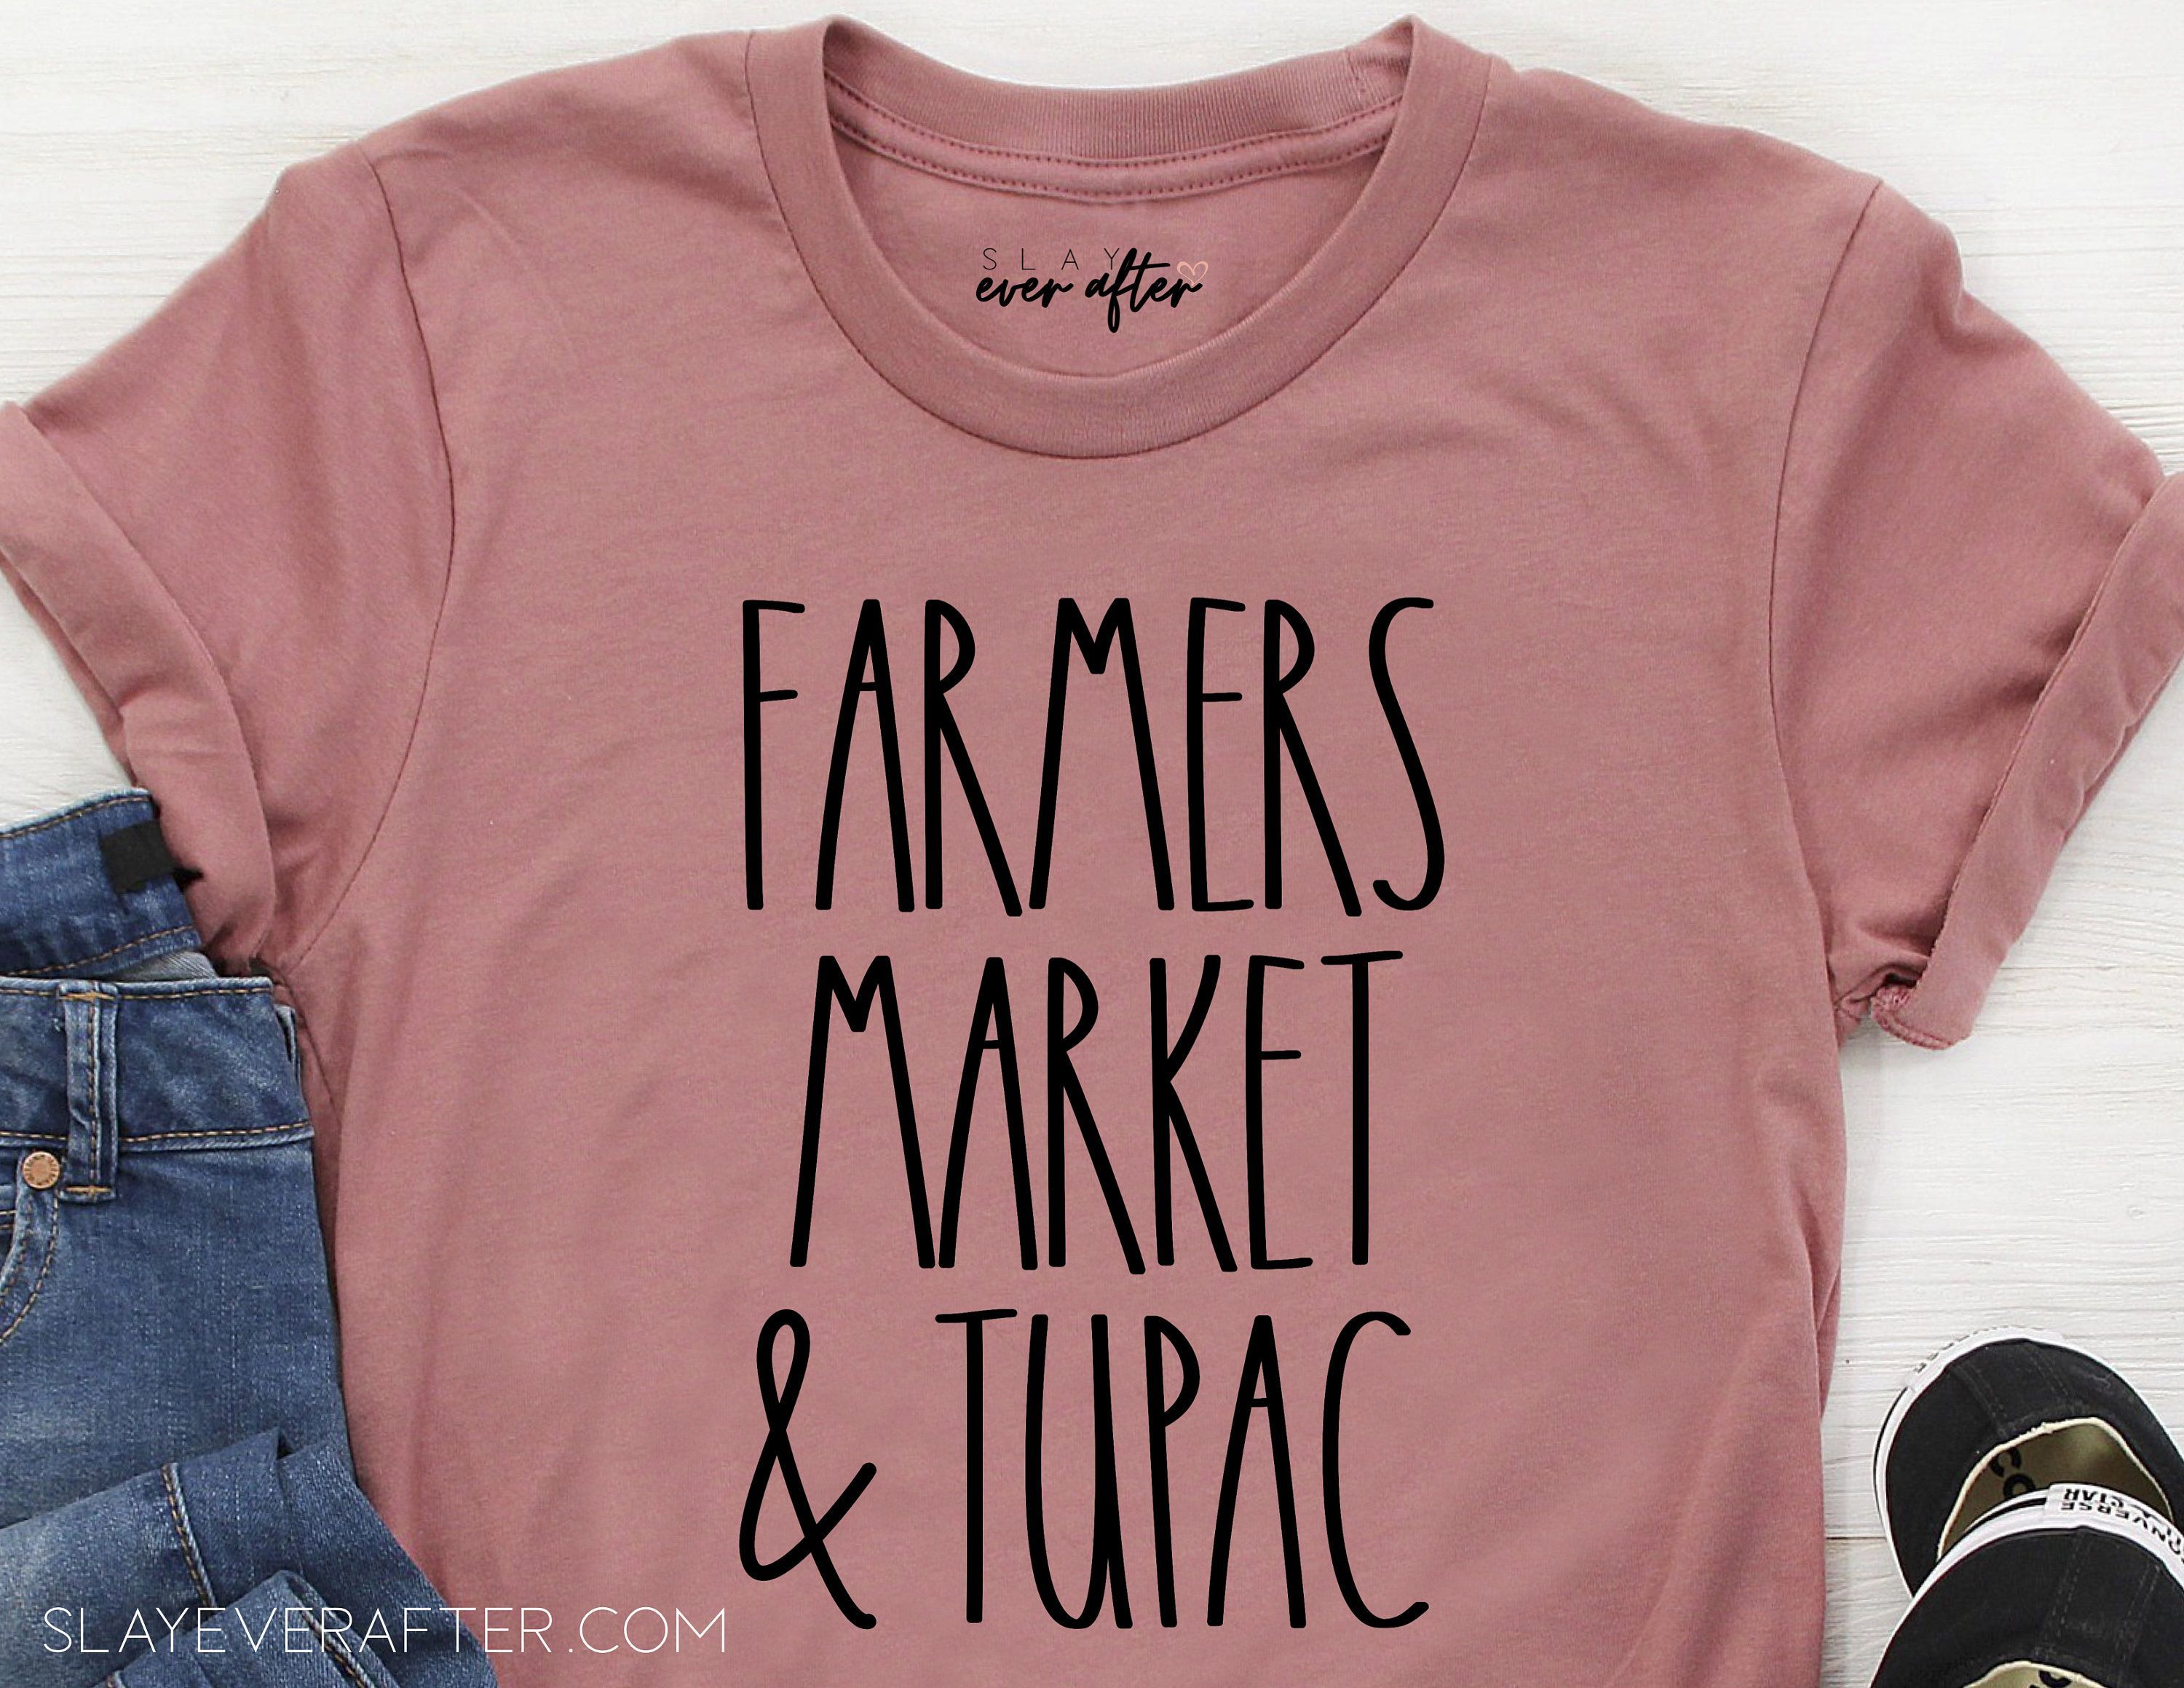 Farmers Market & Tupac Shirt, Assorted Styles, Girl Shirt, Farmers Market Shirt, Sayings SHirt, Funny Tshirt, Mom Shirt, Gift - Farmers Market & Tupac Shirt, Assorted Styles, Girl Shirt, Farmers Market Shirt, Sayings SHirt, Funny Tshirt, Mom Shirt, Gift -   14 style Girl funny ideas